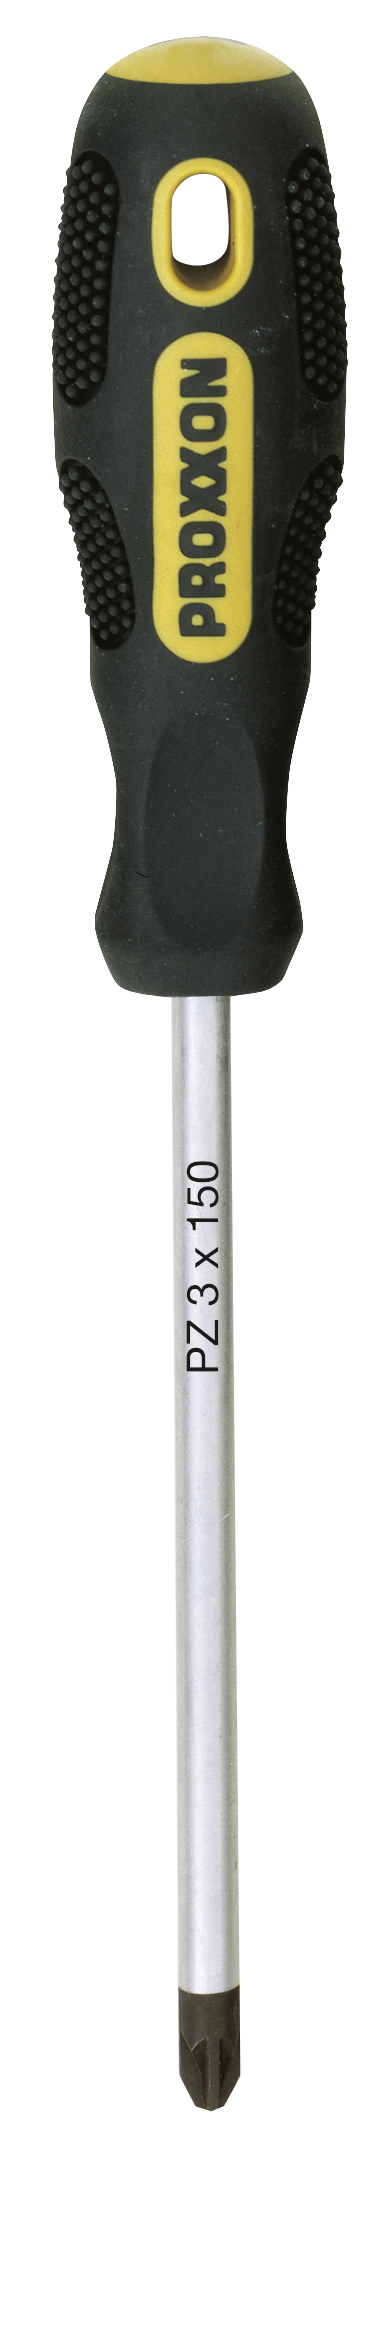 FLEX-DOT-skruetrækker krydskærv PZ 3 x 150, PROXXON